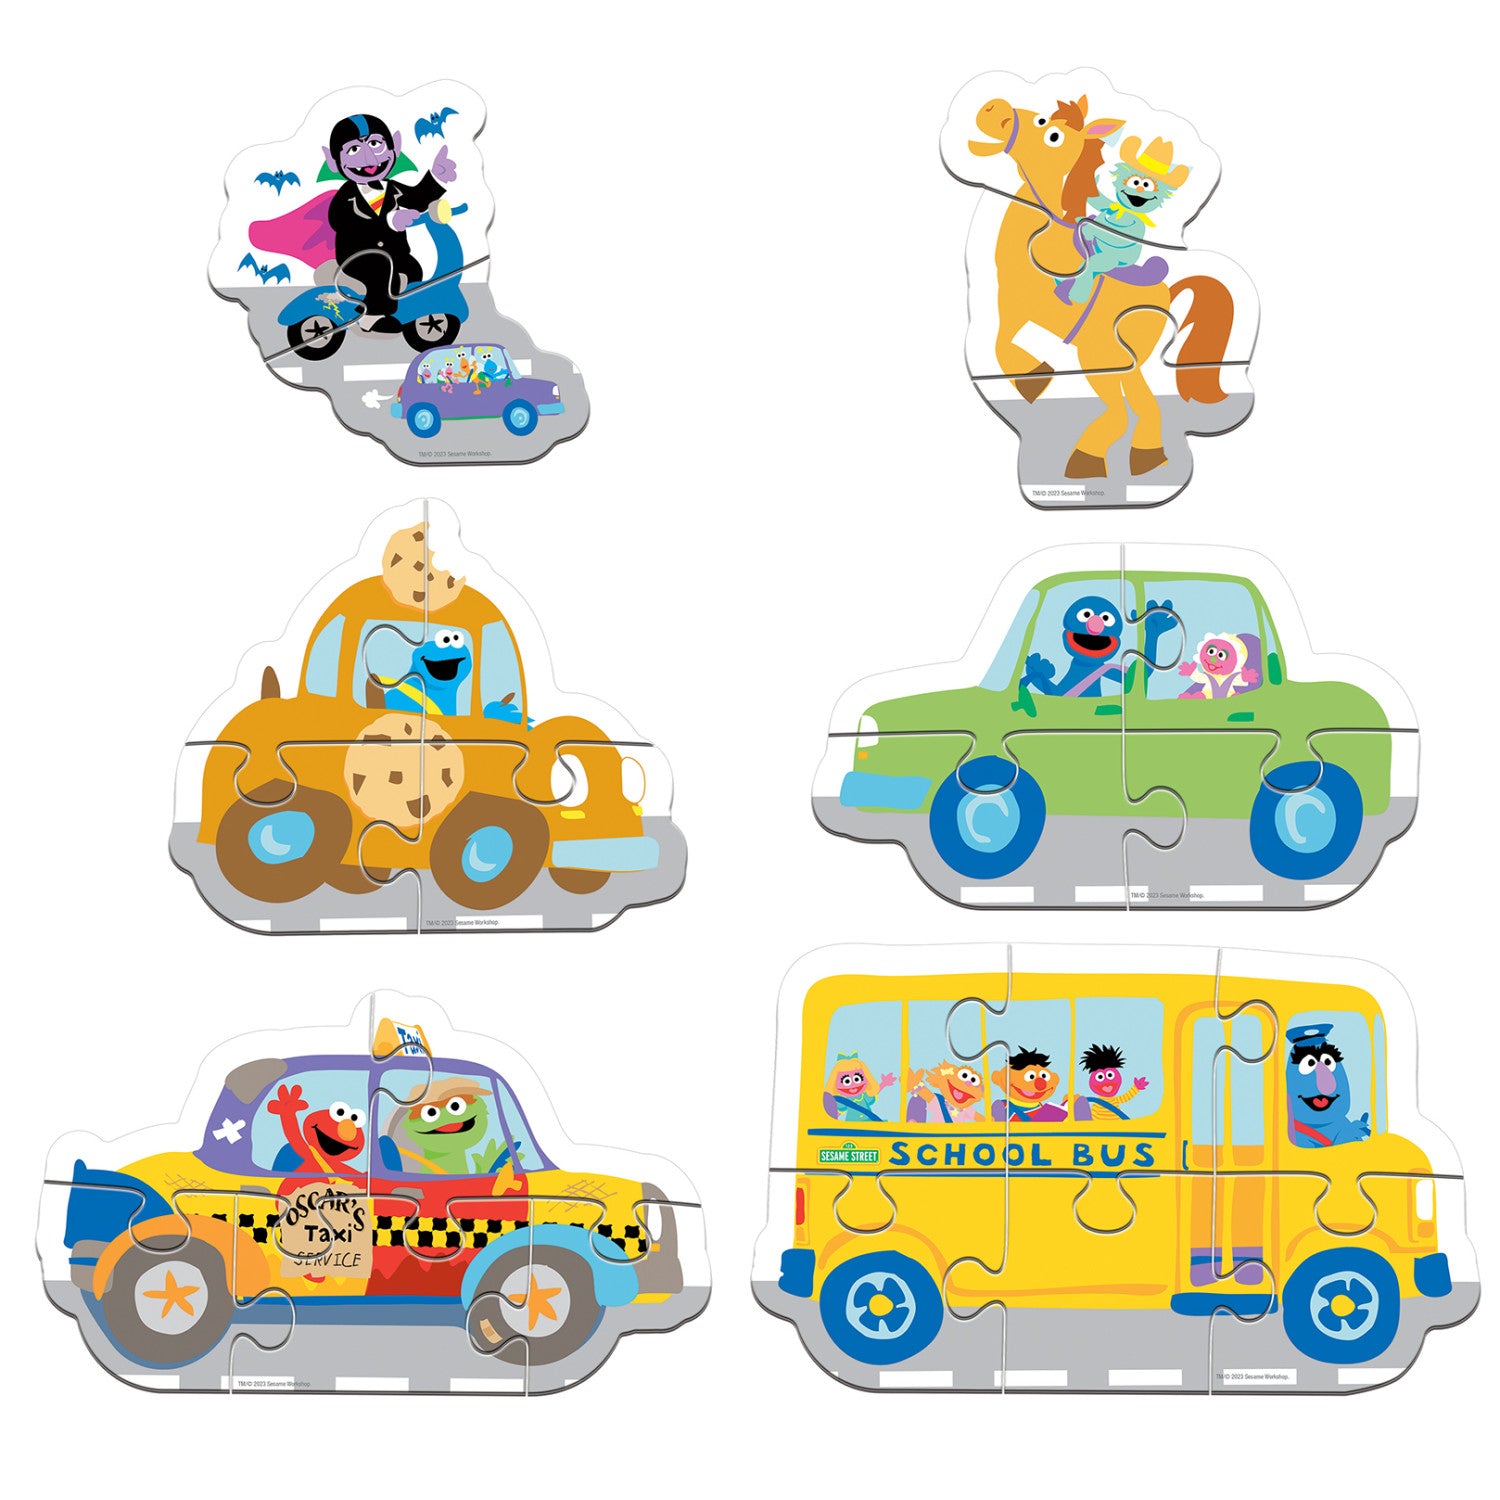 Sesame Street - Vehicles 6-Pack Mini Shaped Puzzles